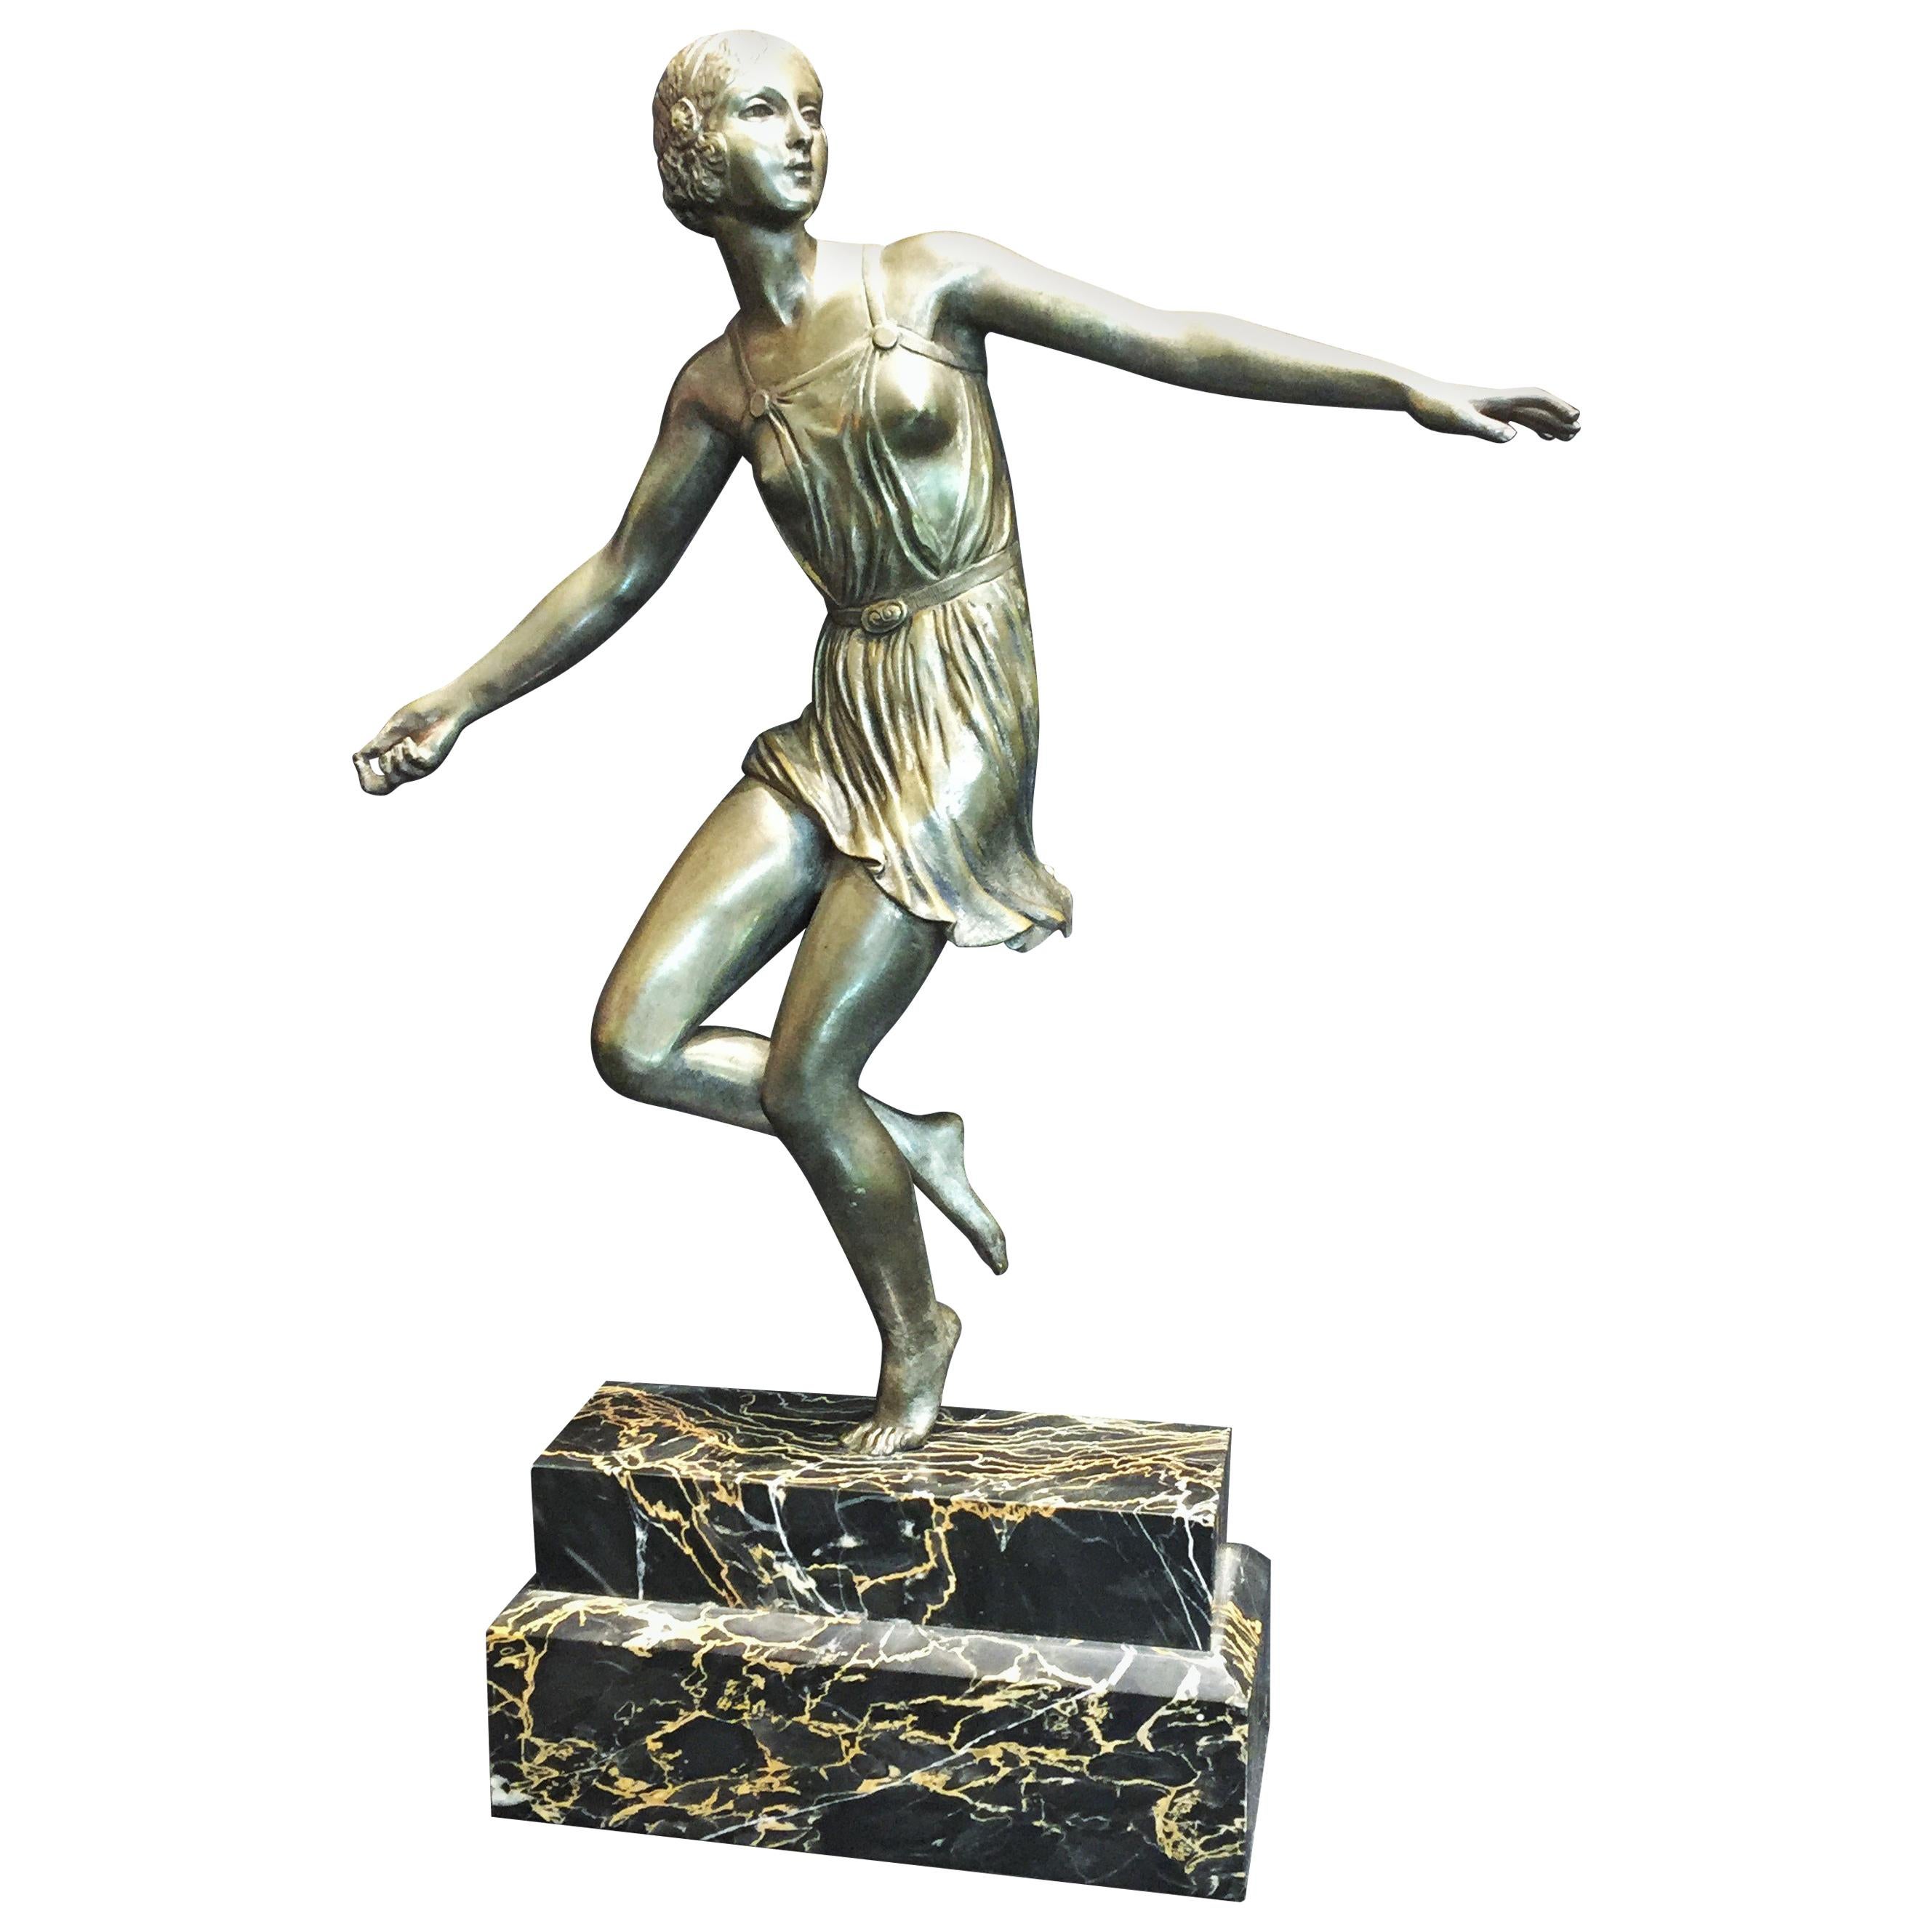 Josselin, French Art Deco Semi-Nude Erotic Female Dancer Bronze Sculpture, 1920s